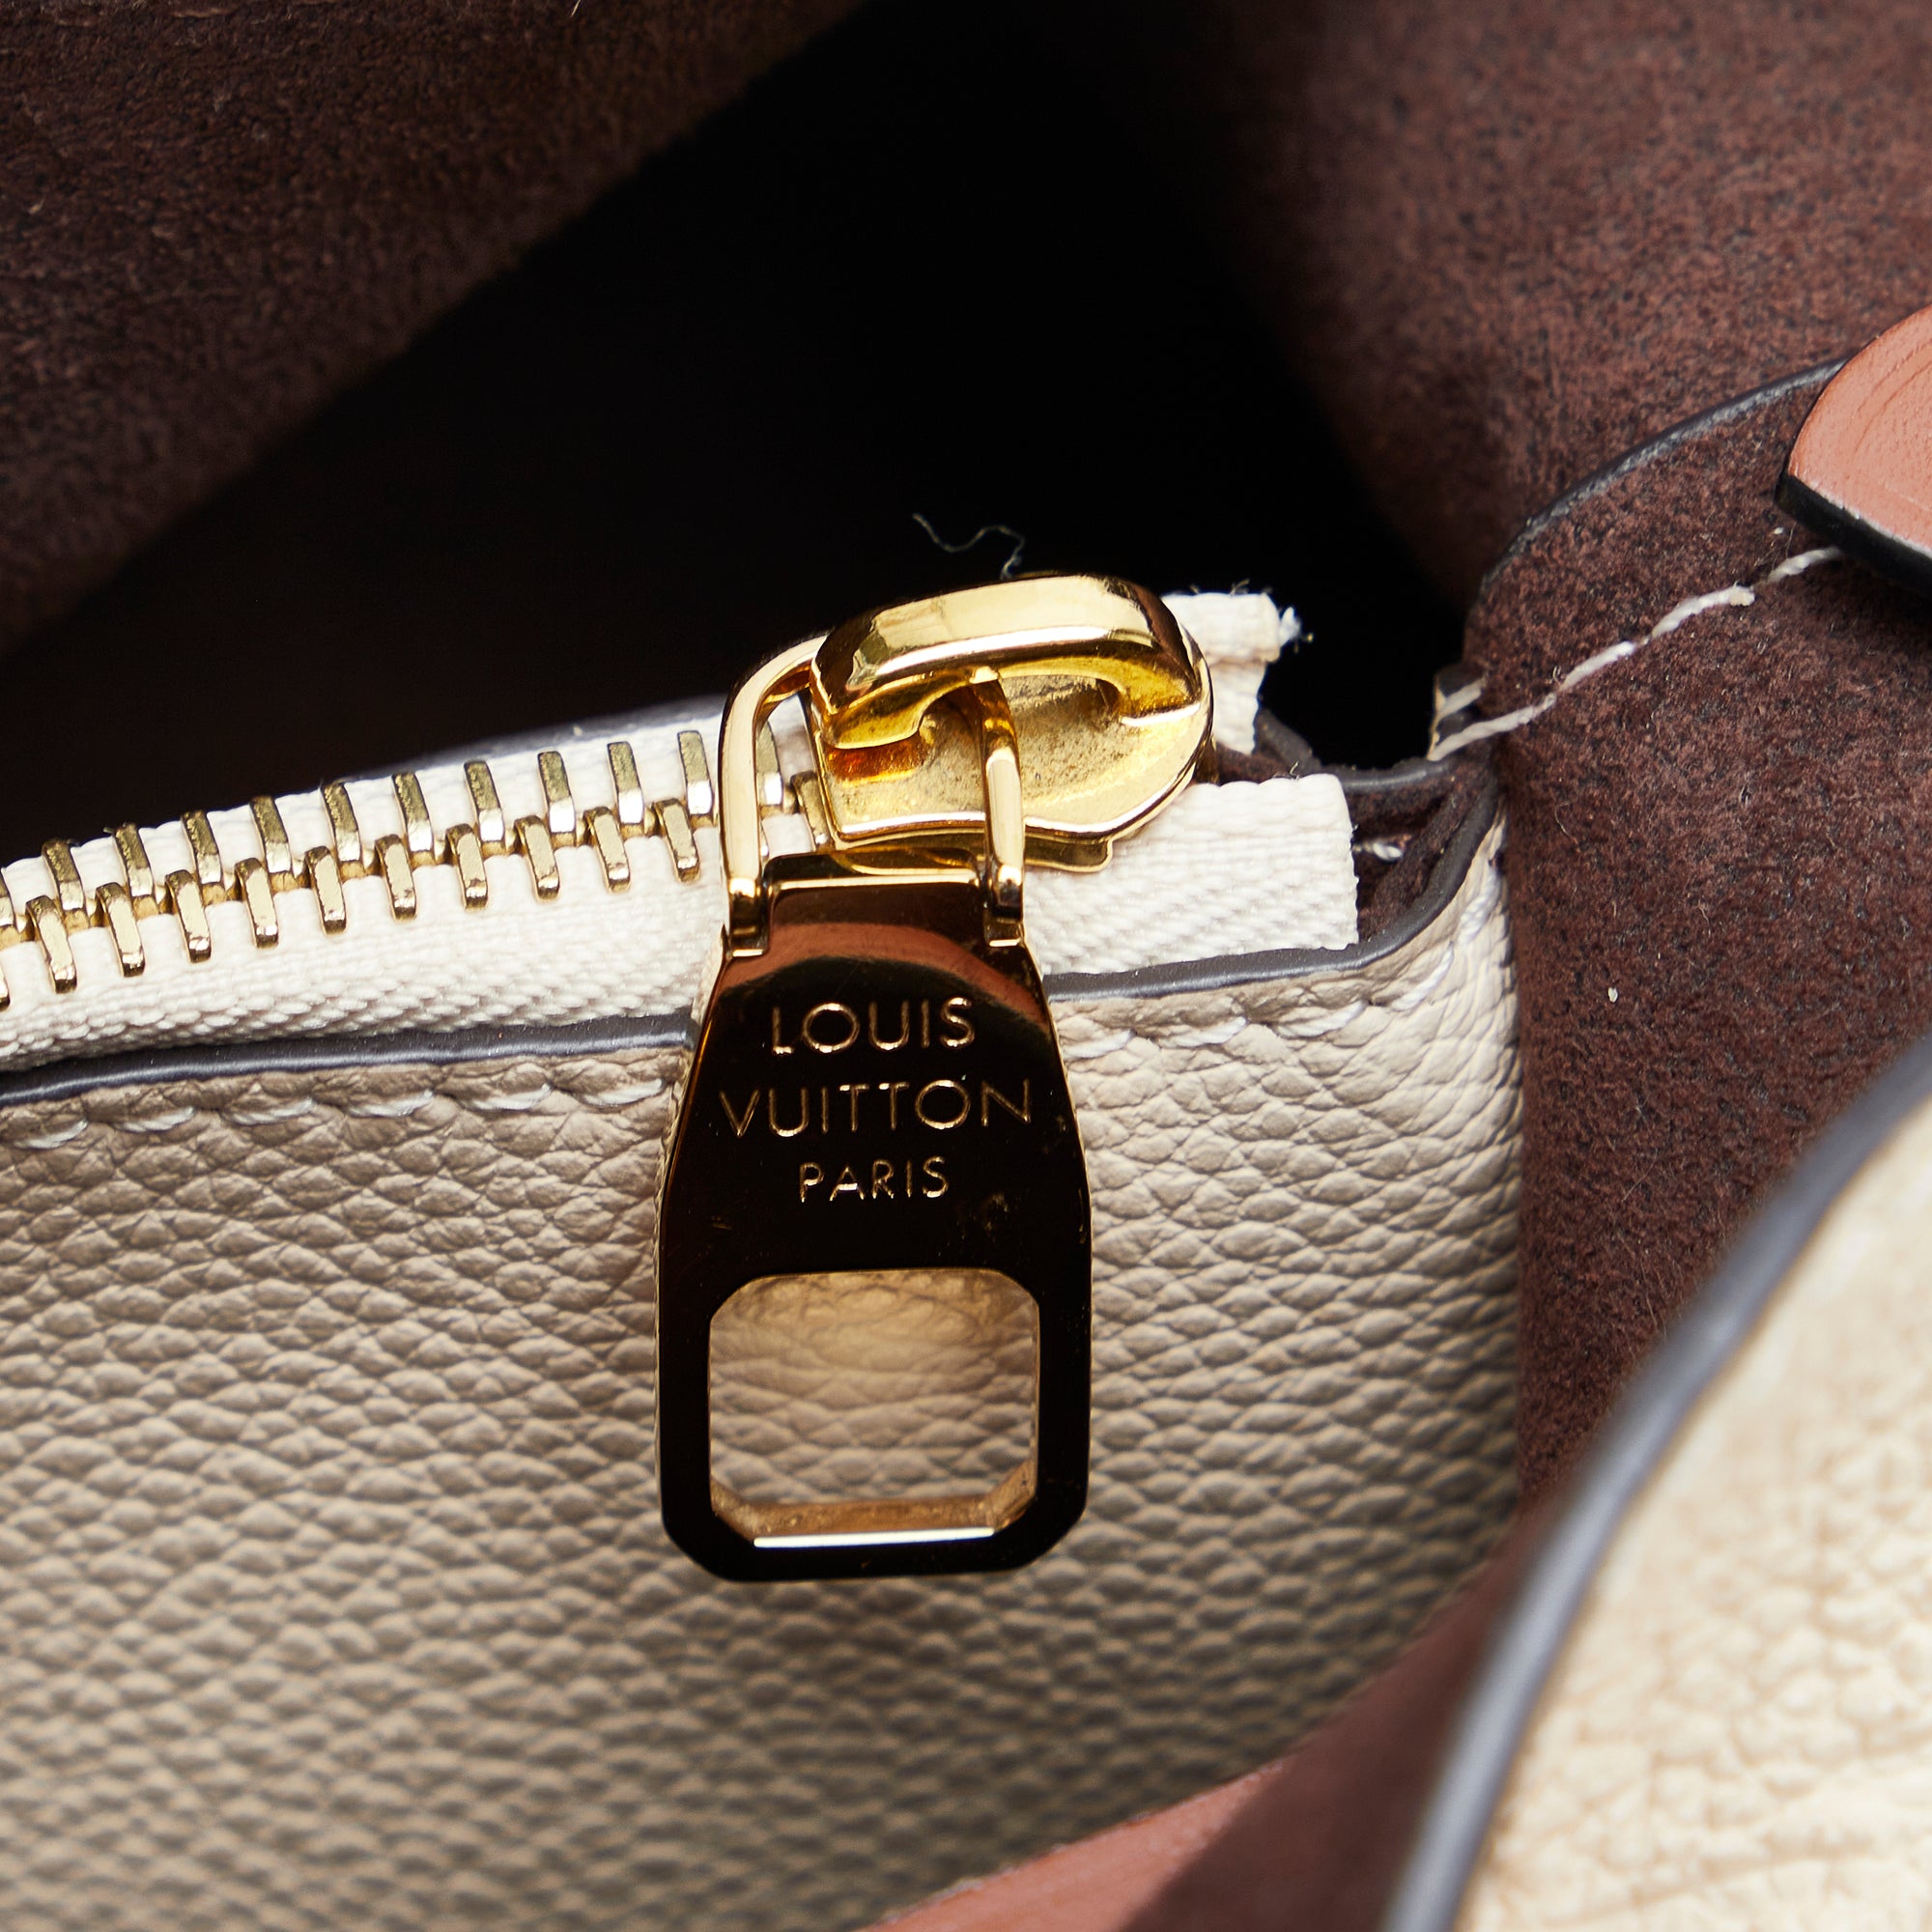 Preloved Louis Vuitton Gold and White Monogram Empreinte Giant by The Pool NeoNoe Bb Handbag AR0241 92123